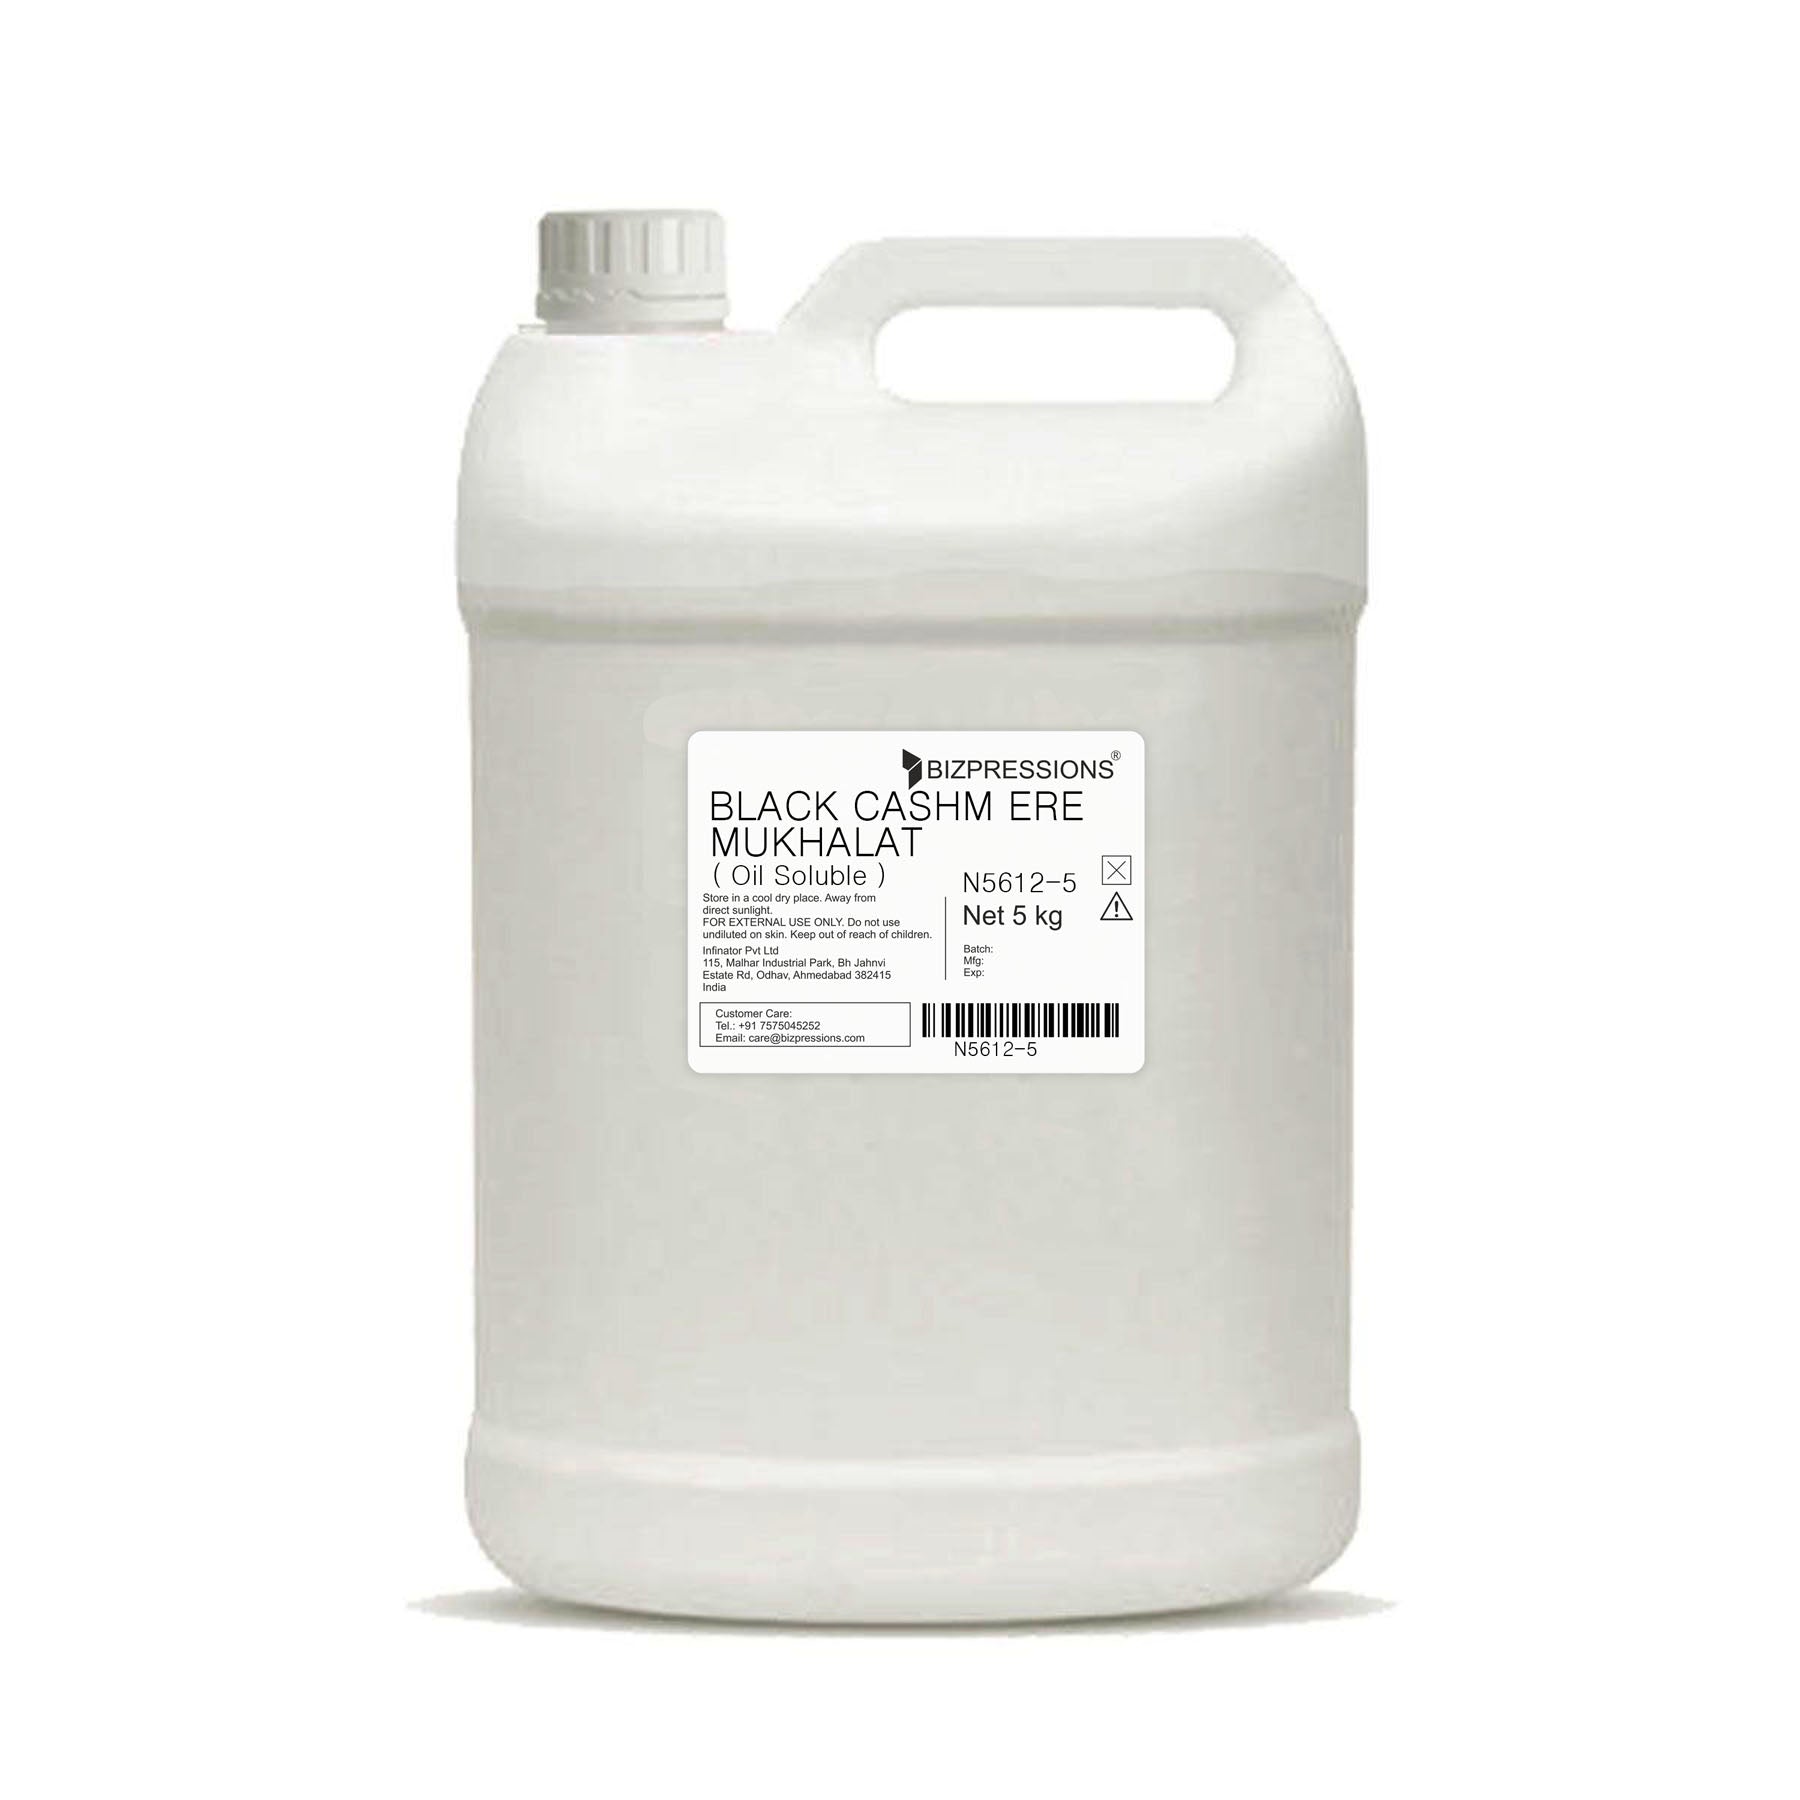 BLACK CASHMERE MUKHALAT - Fragrance ( Oil Soluble ) - 5 kg